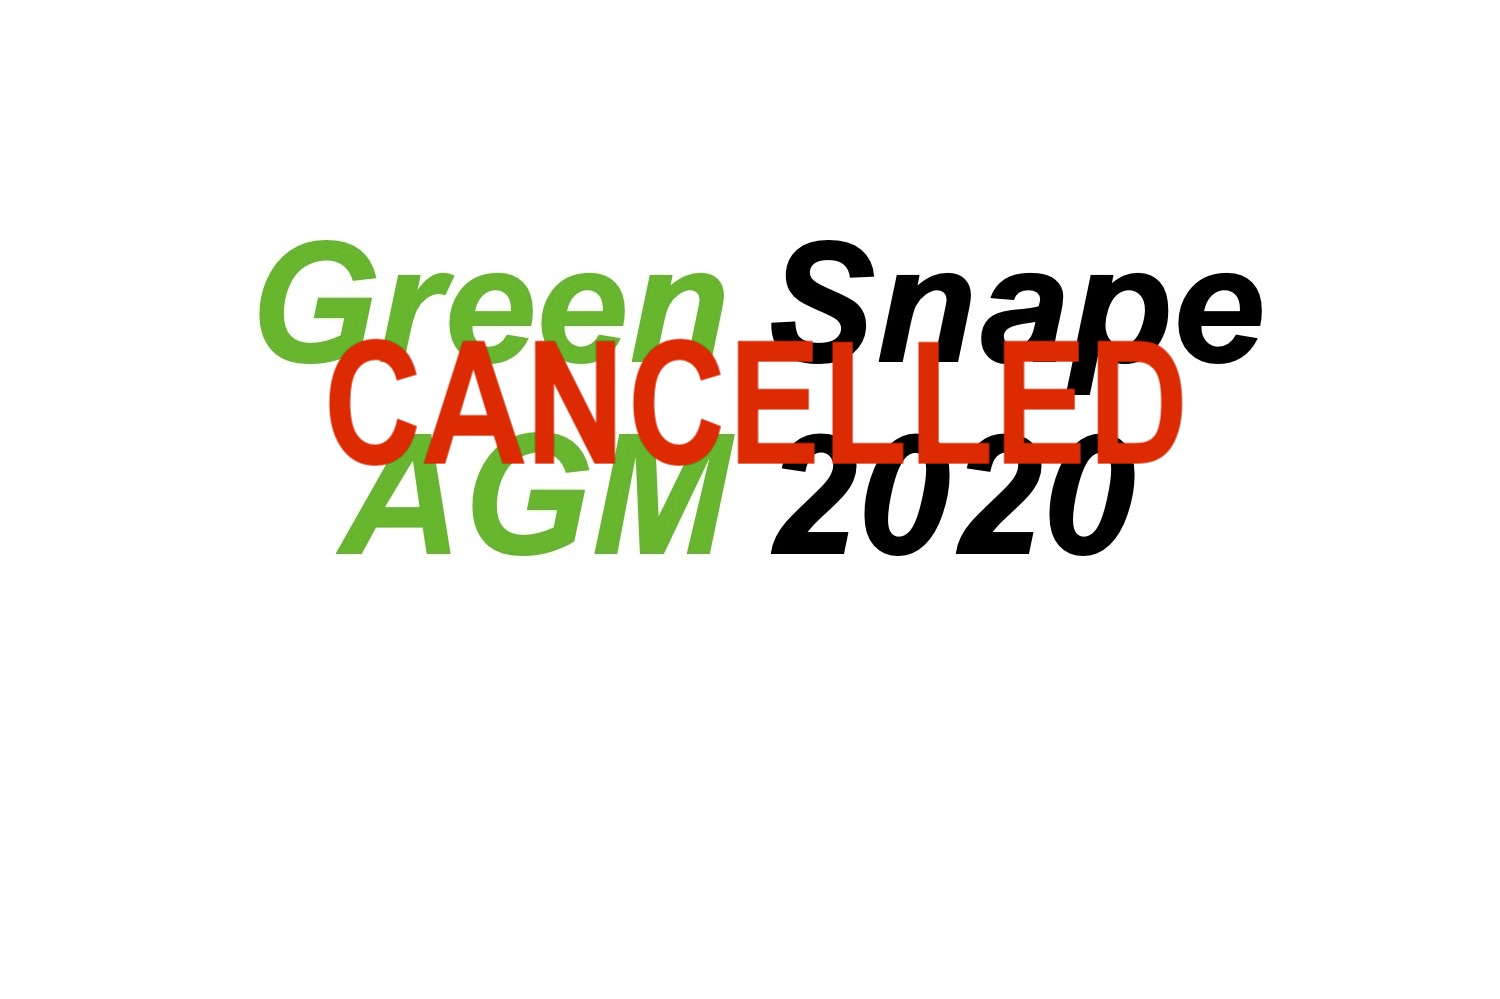 GreenSnape AGM